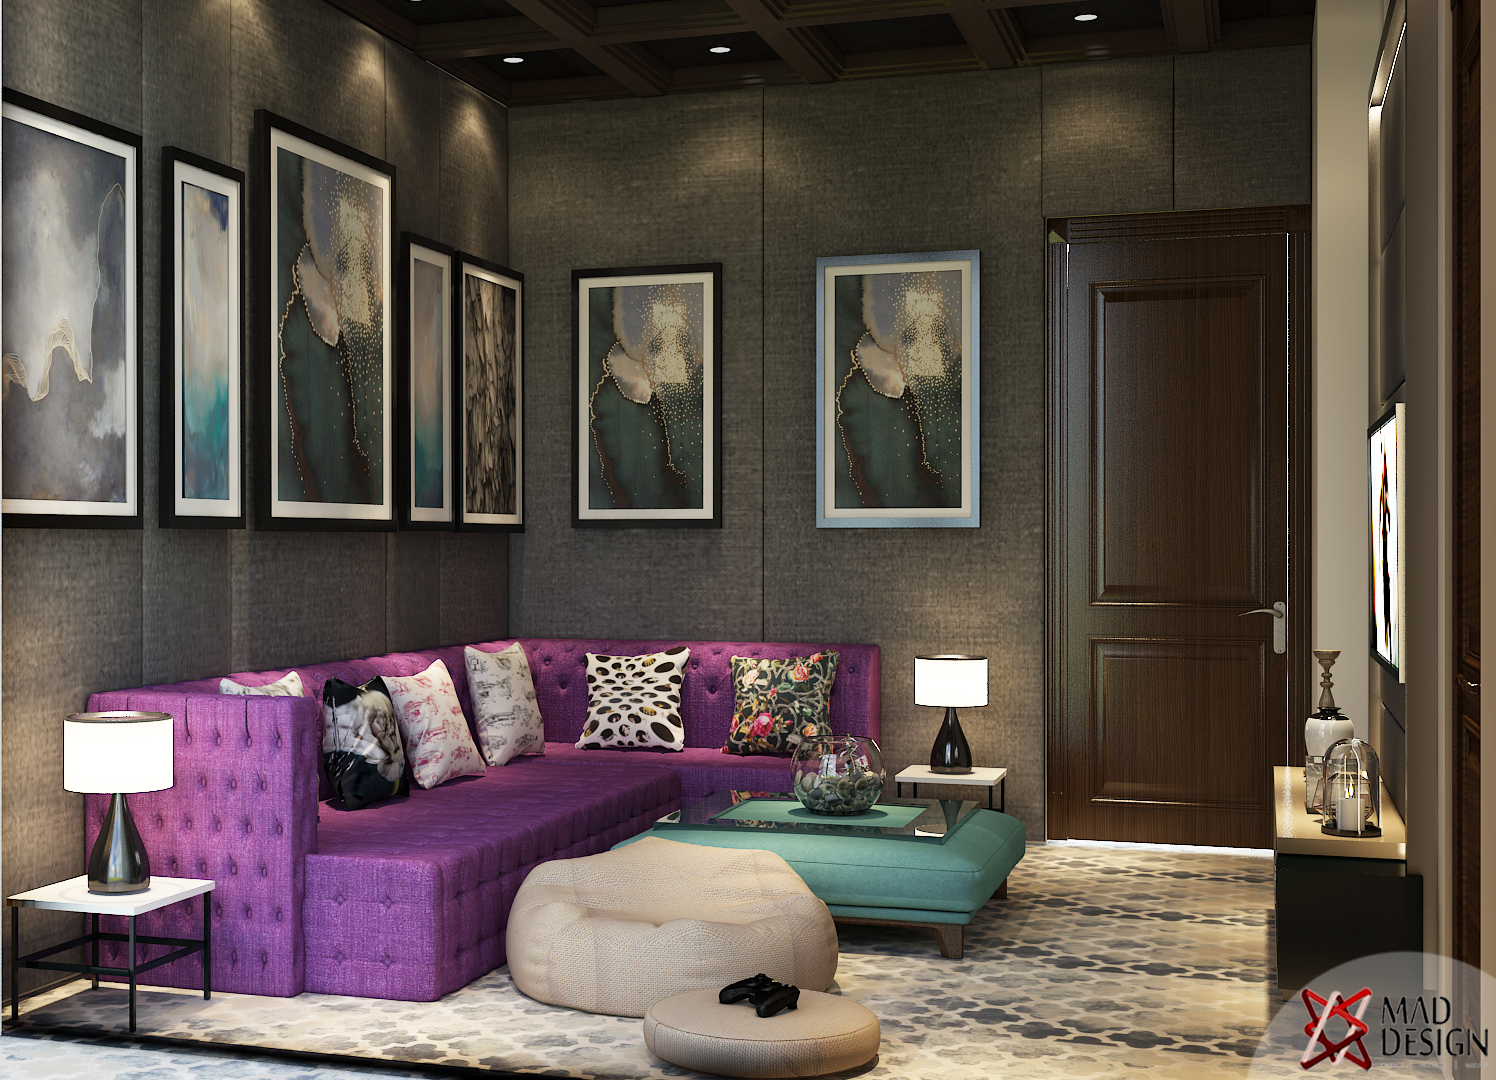 Living Room Design with Side Lamp - MAD Design